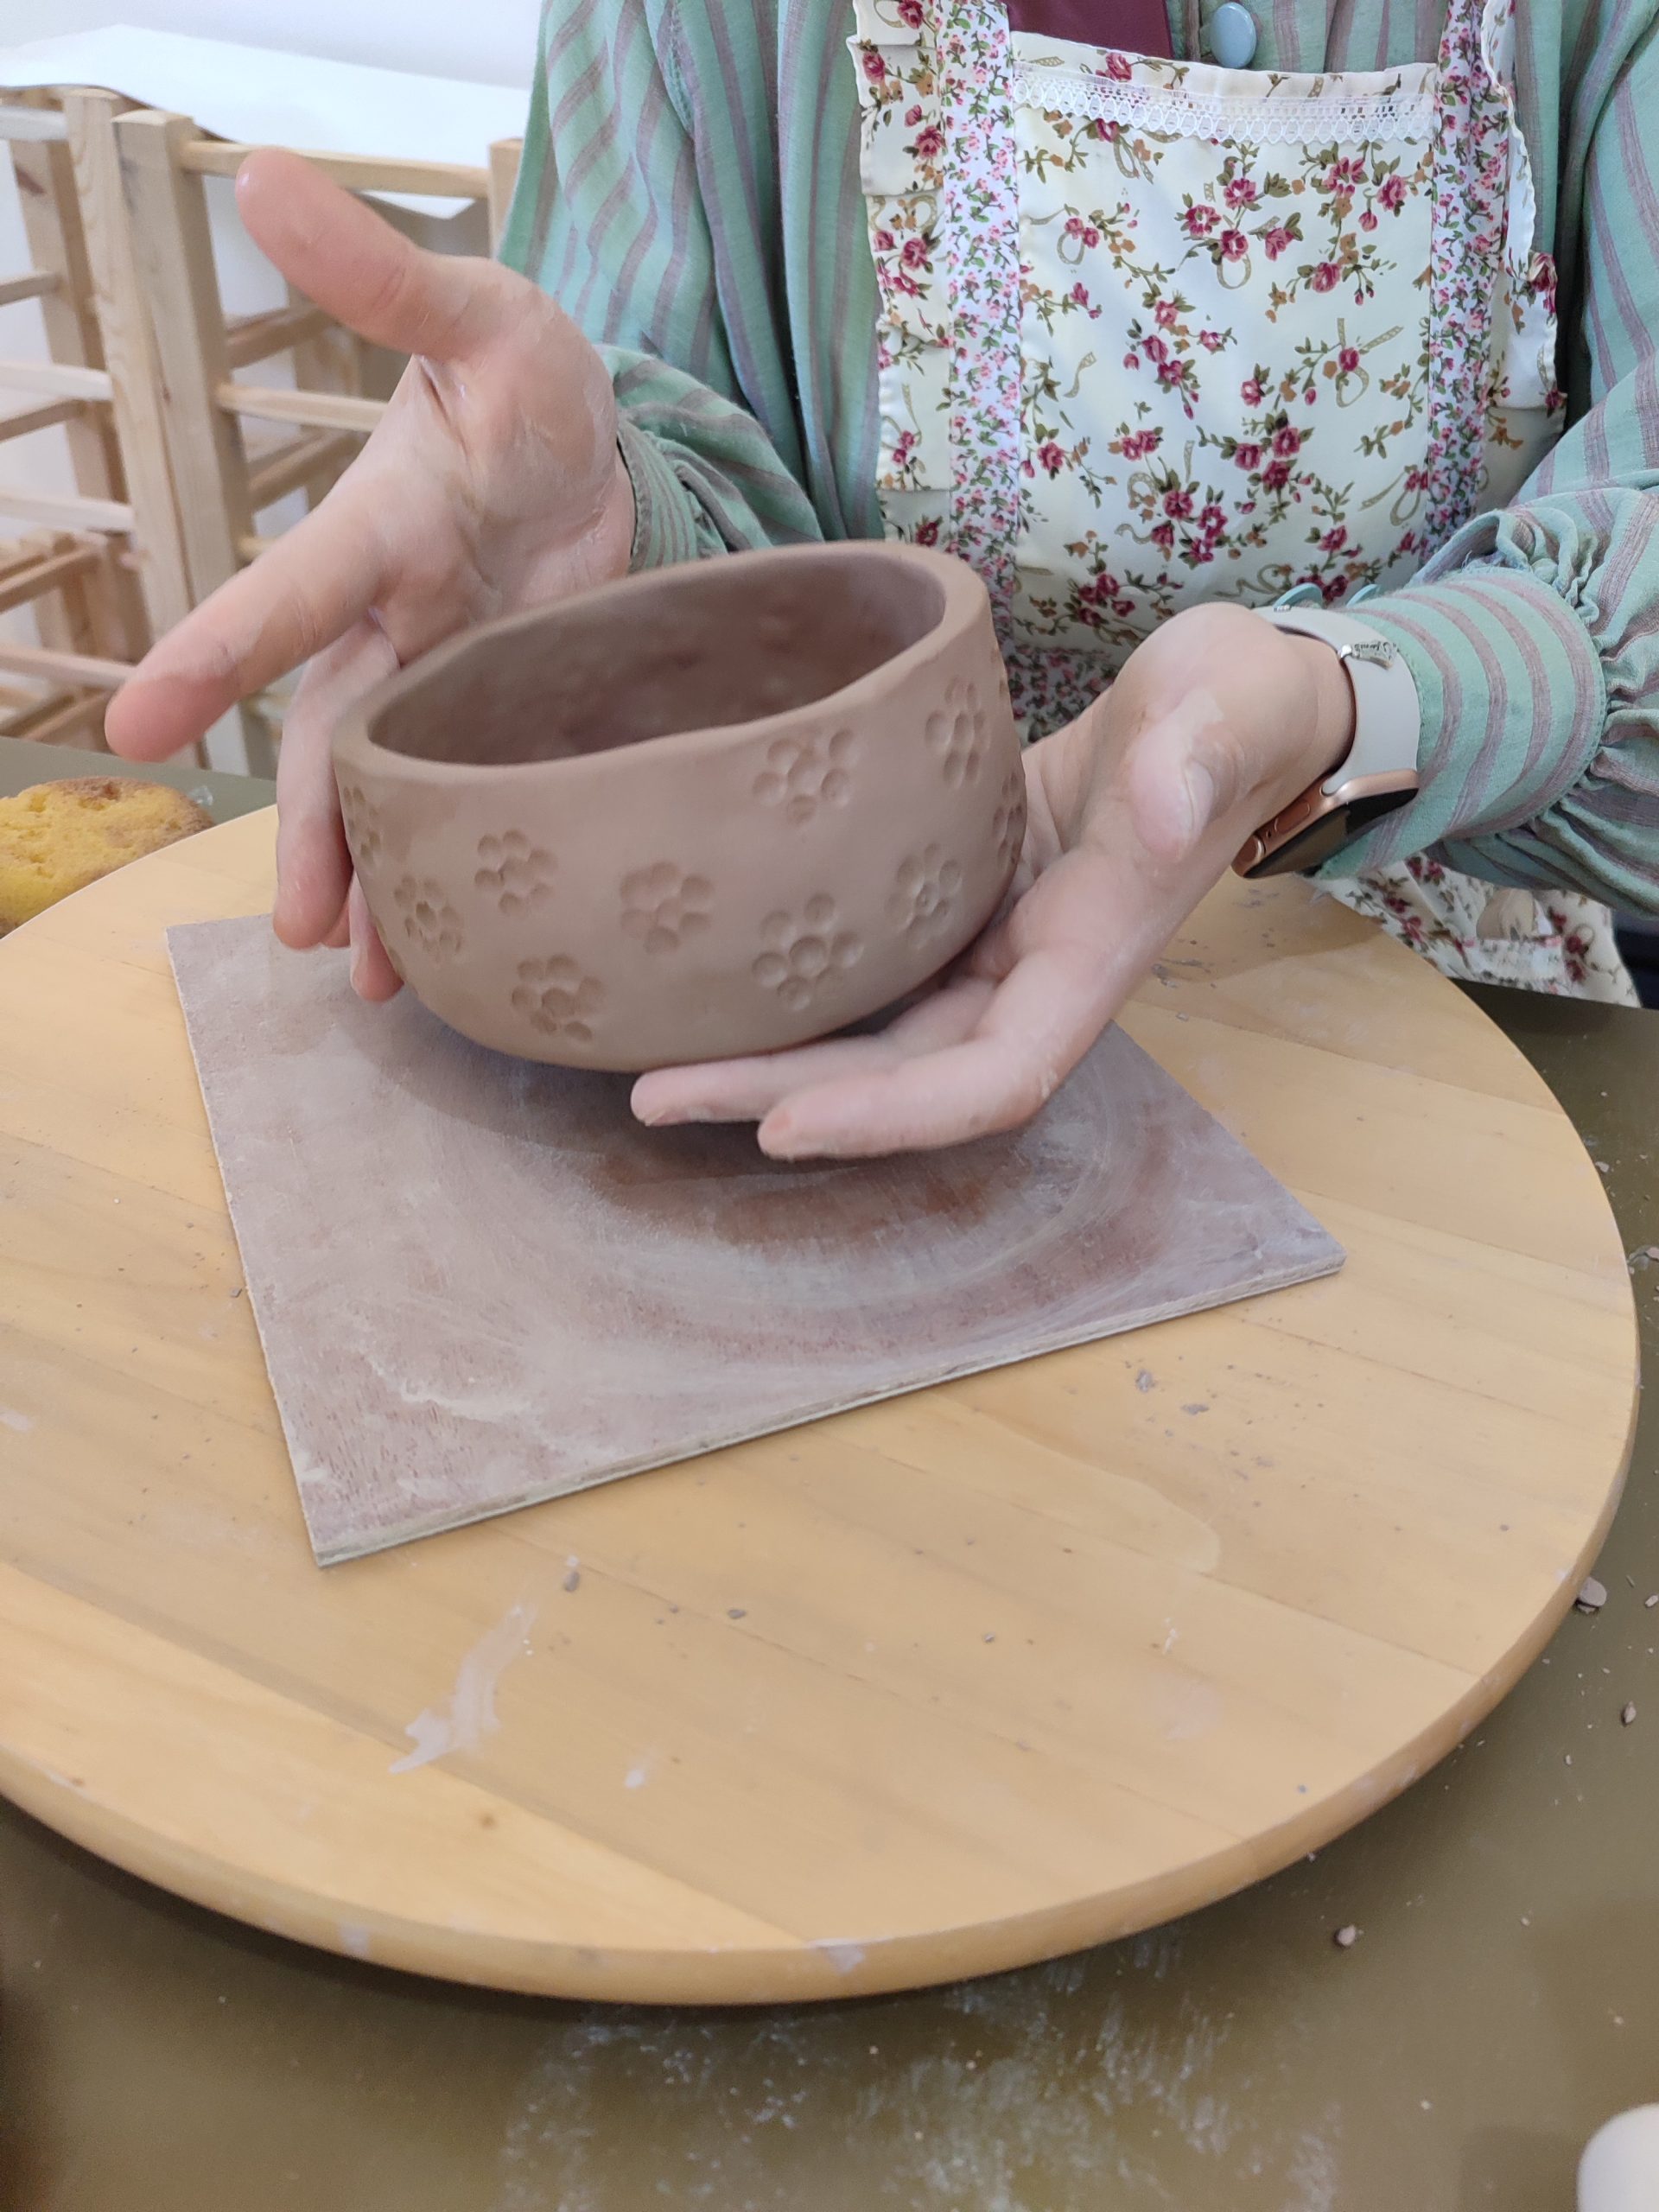 Handbuilding Pottery